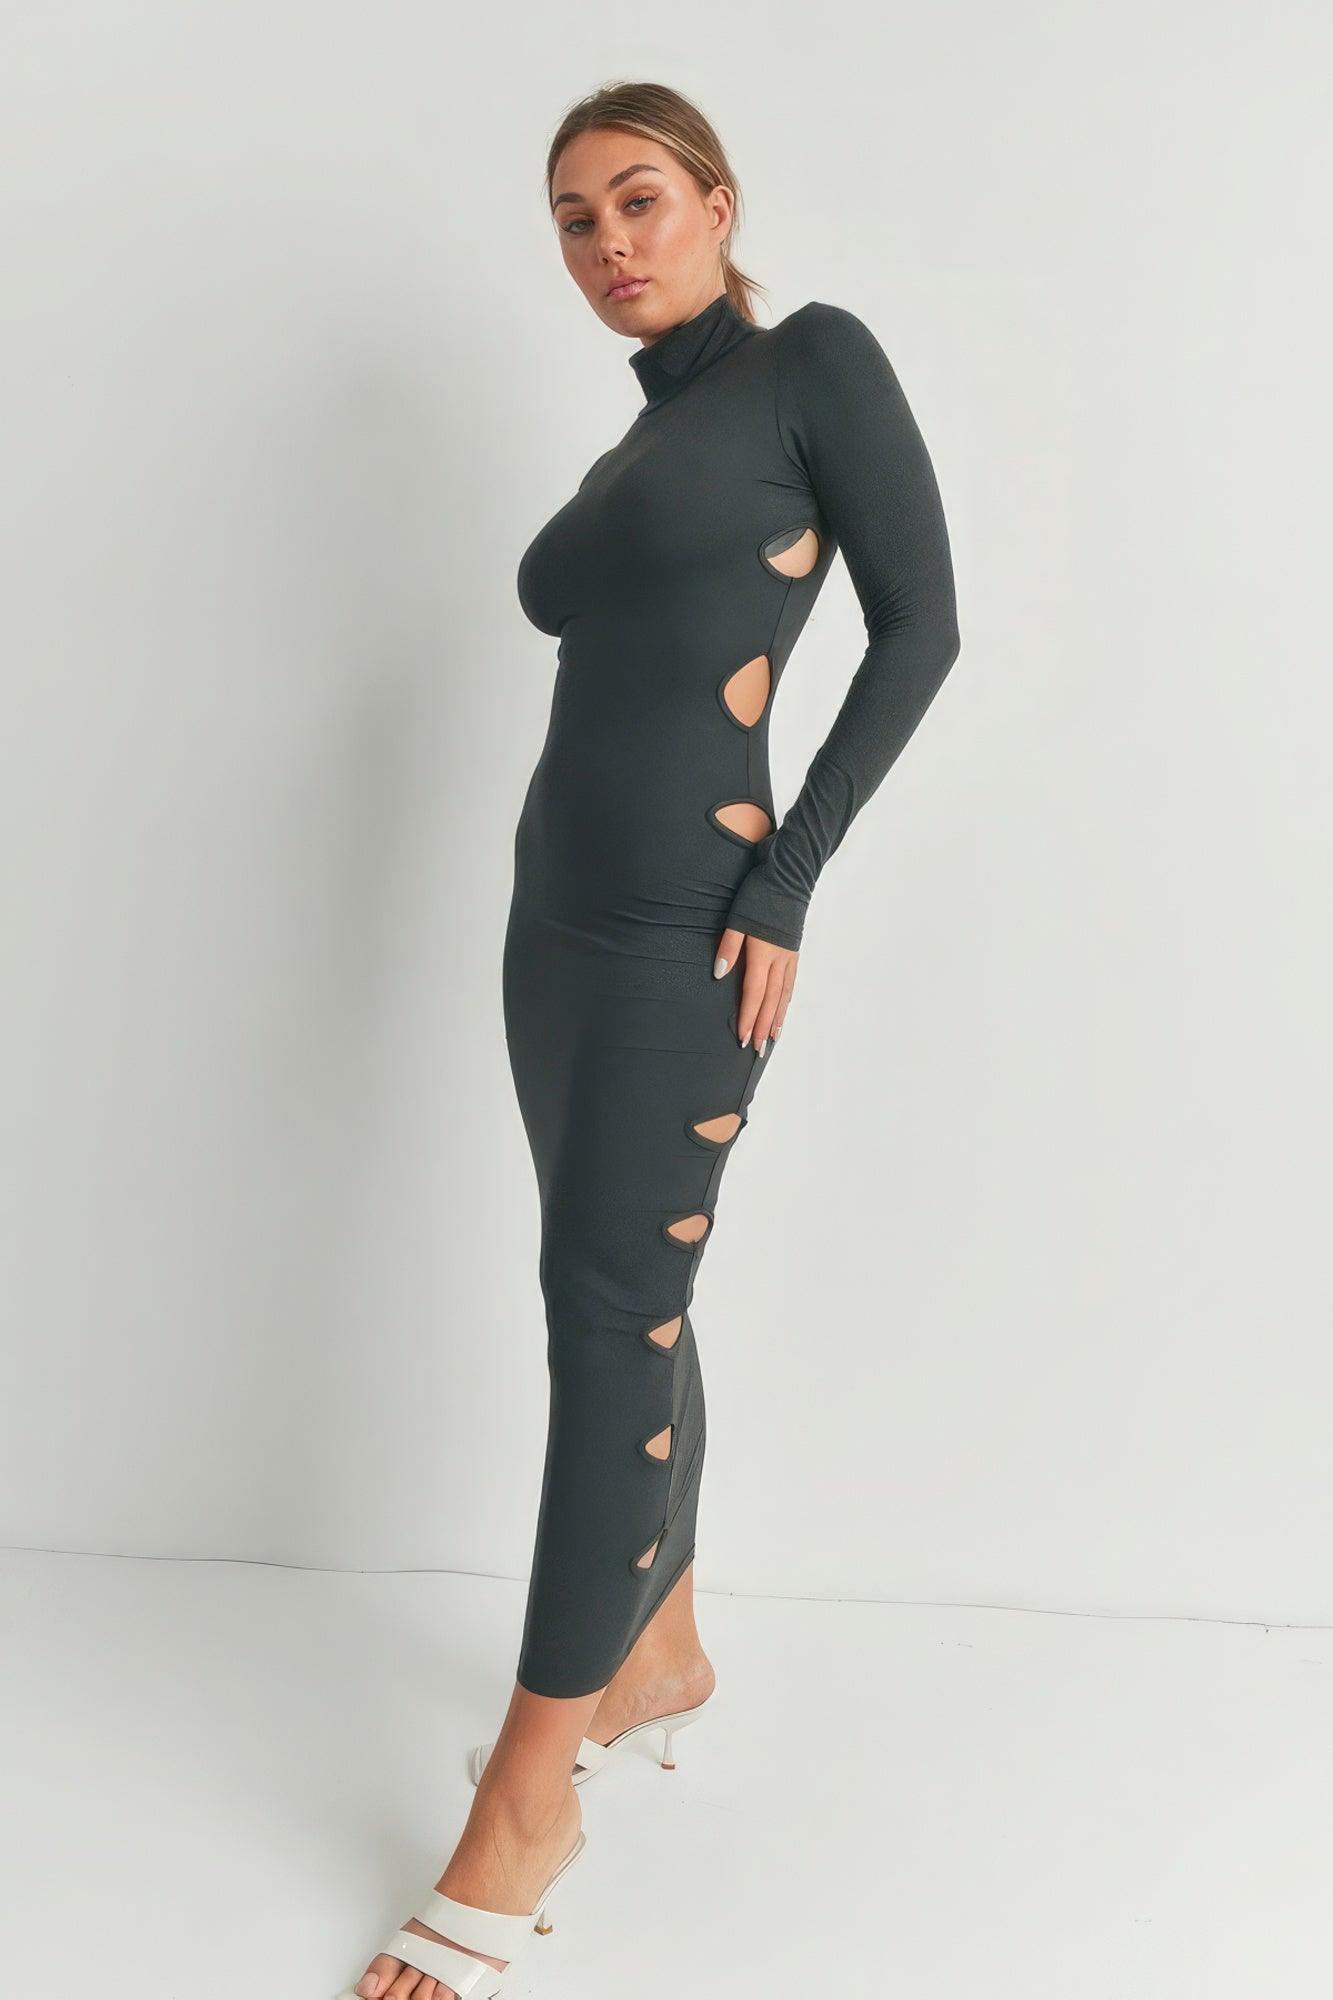 Cutout Detail Maxi Dress - AMIClubwear